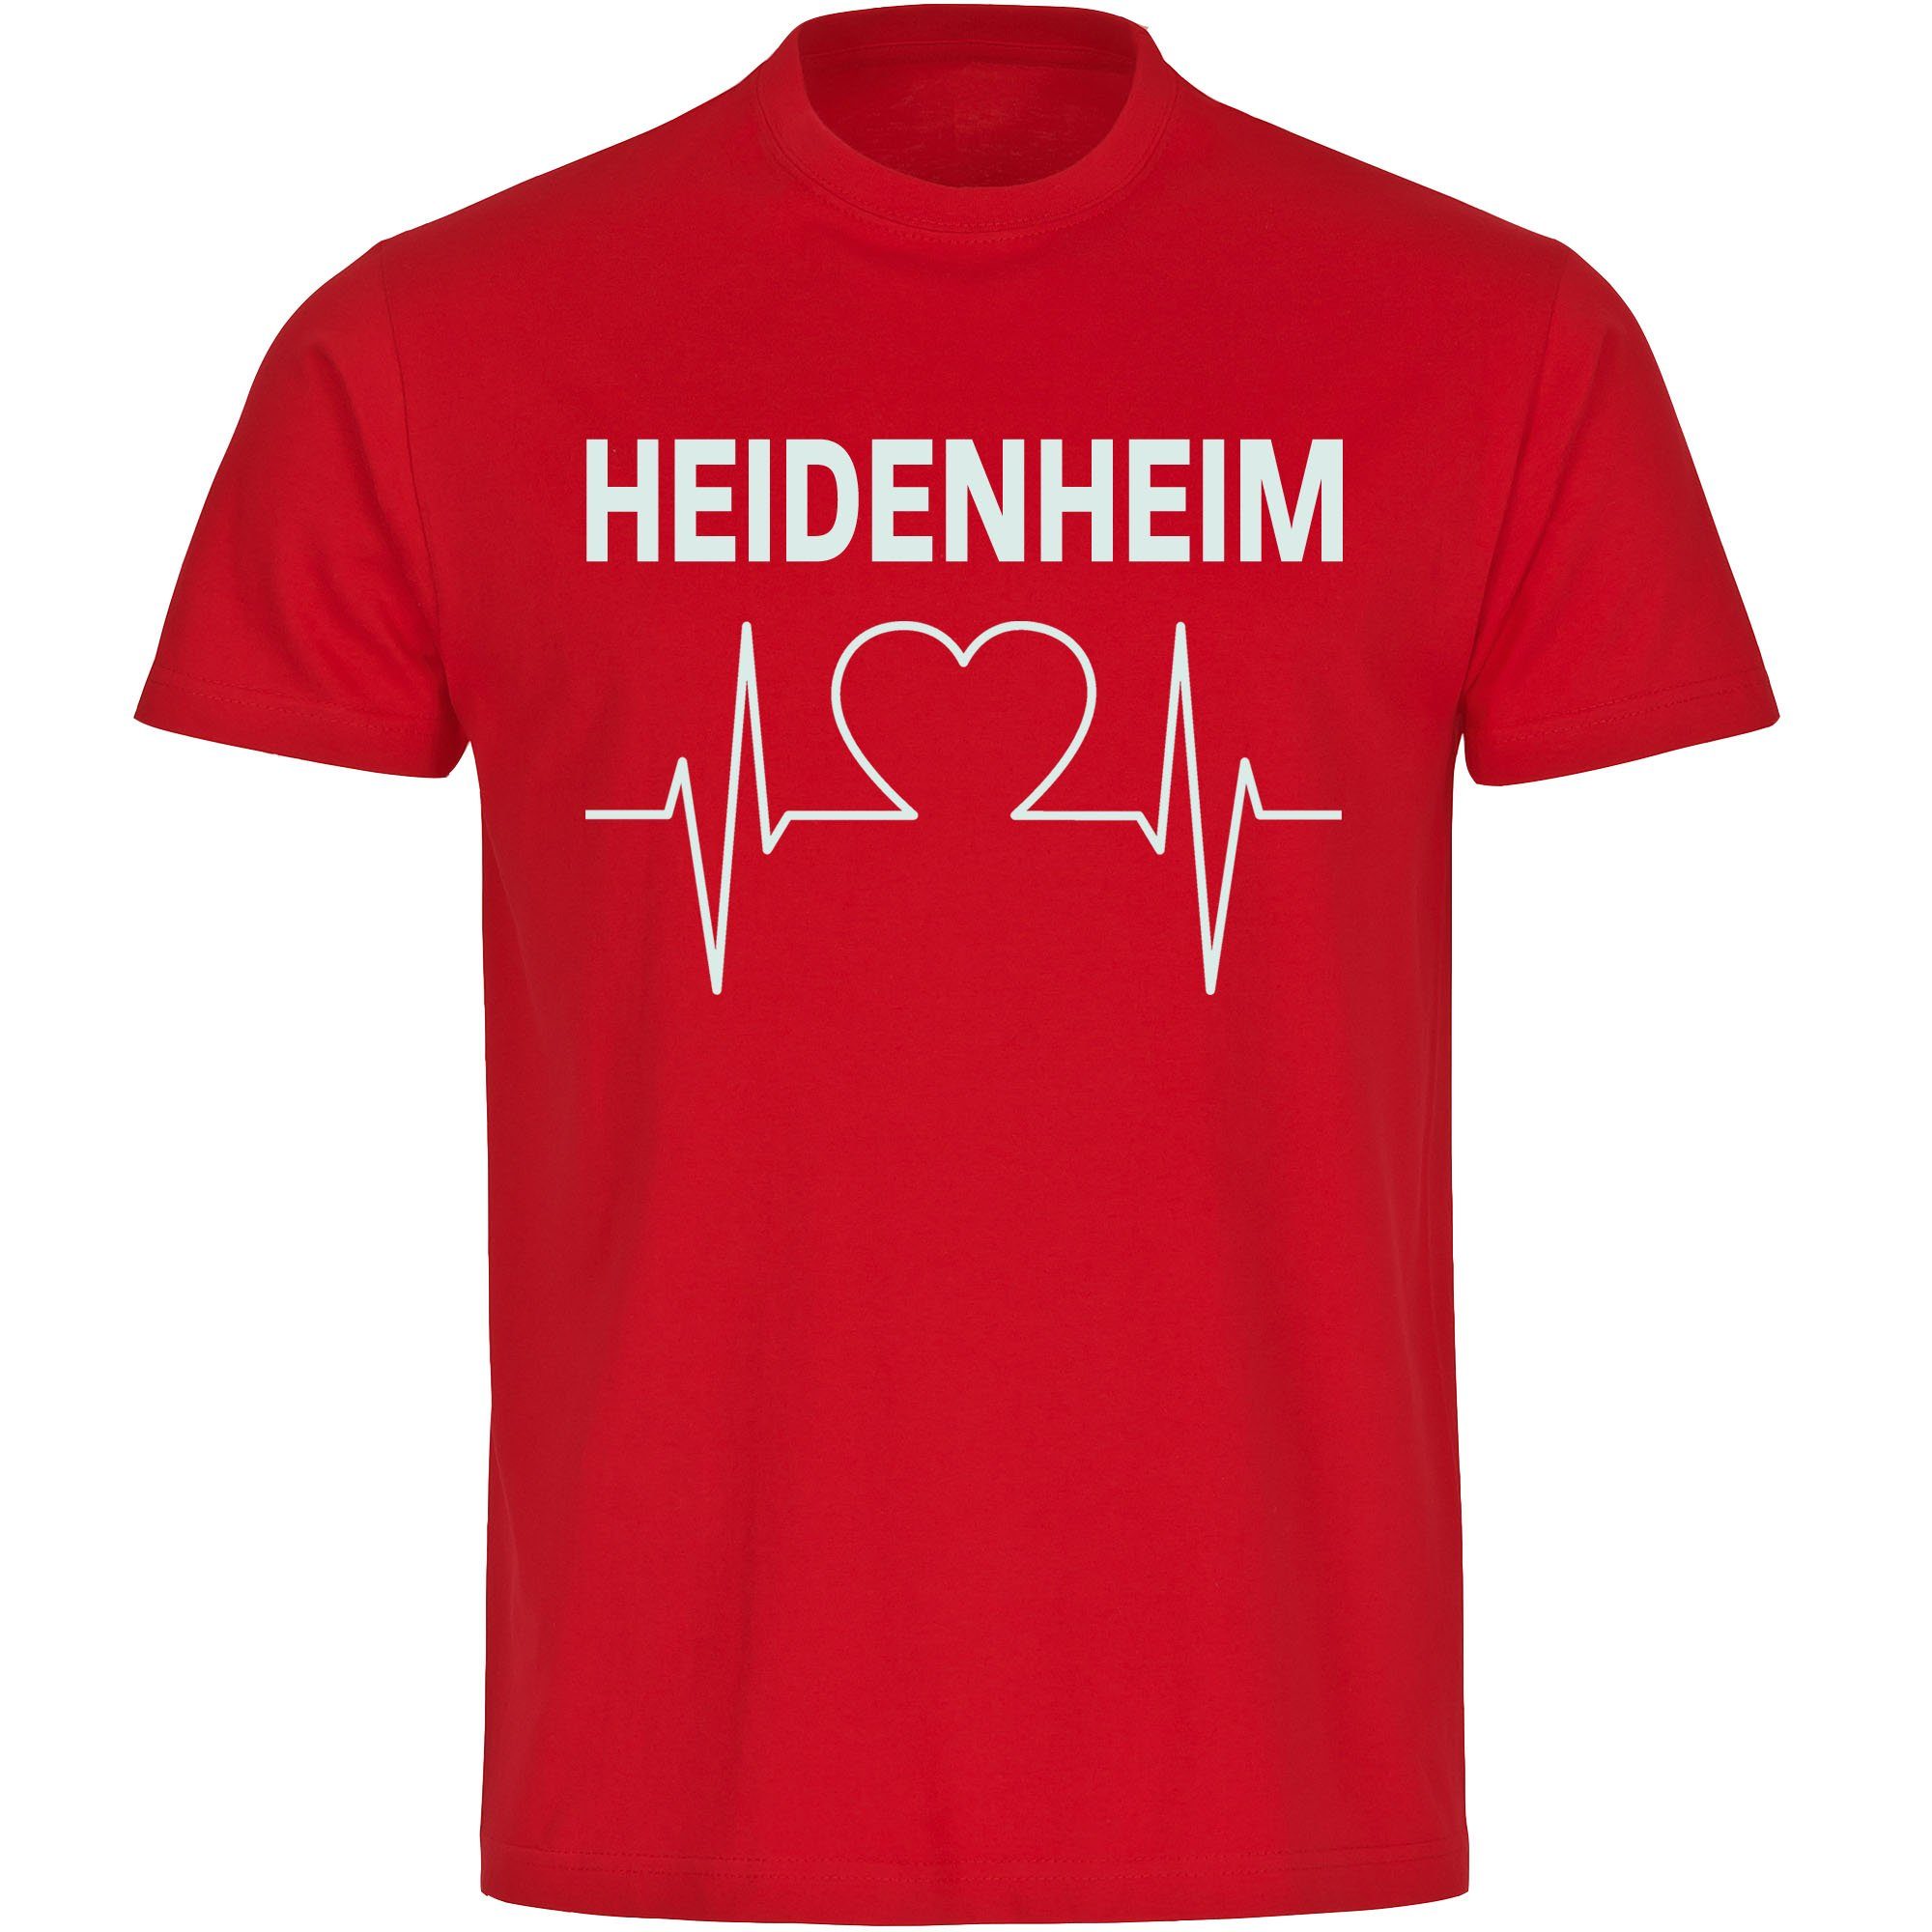 multifanshop T-Shirt Kinder Heidenheim - Herzschlag - Boy Girl